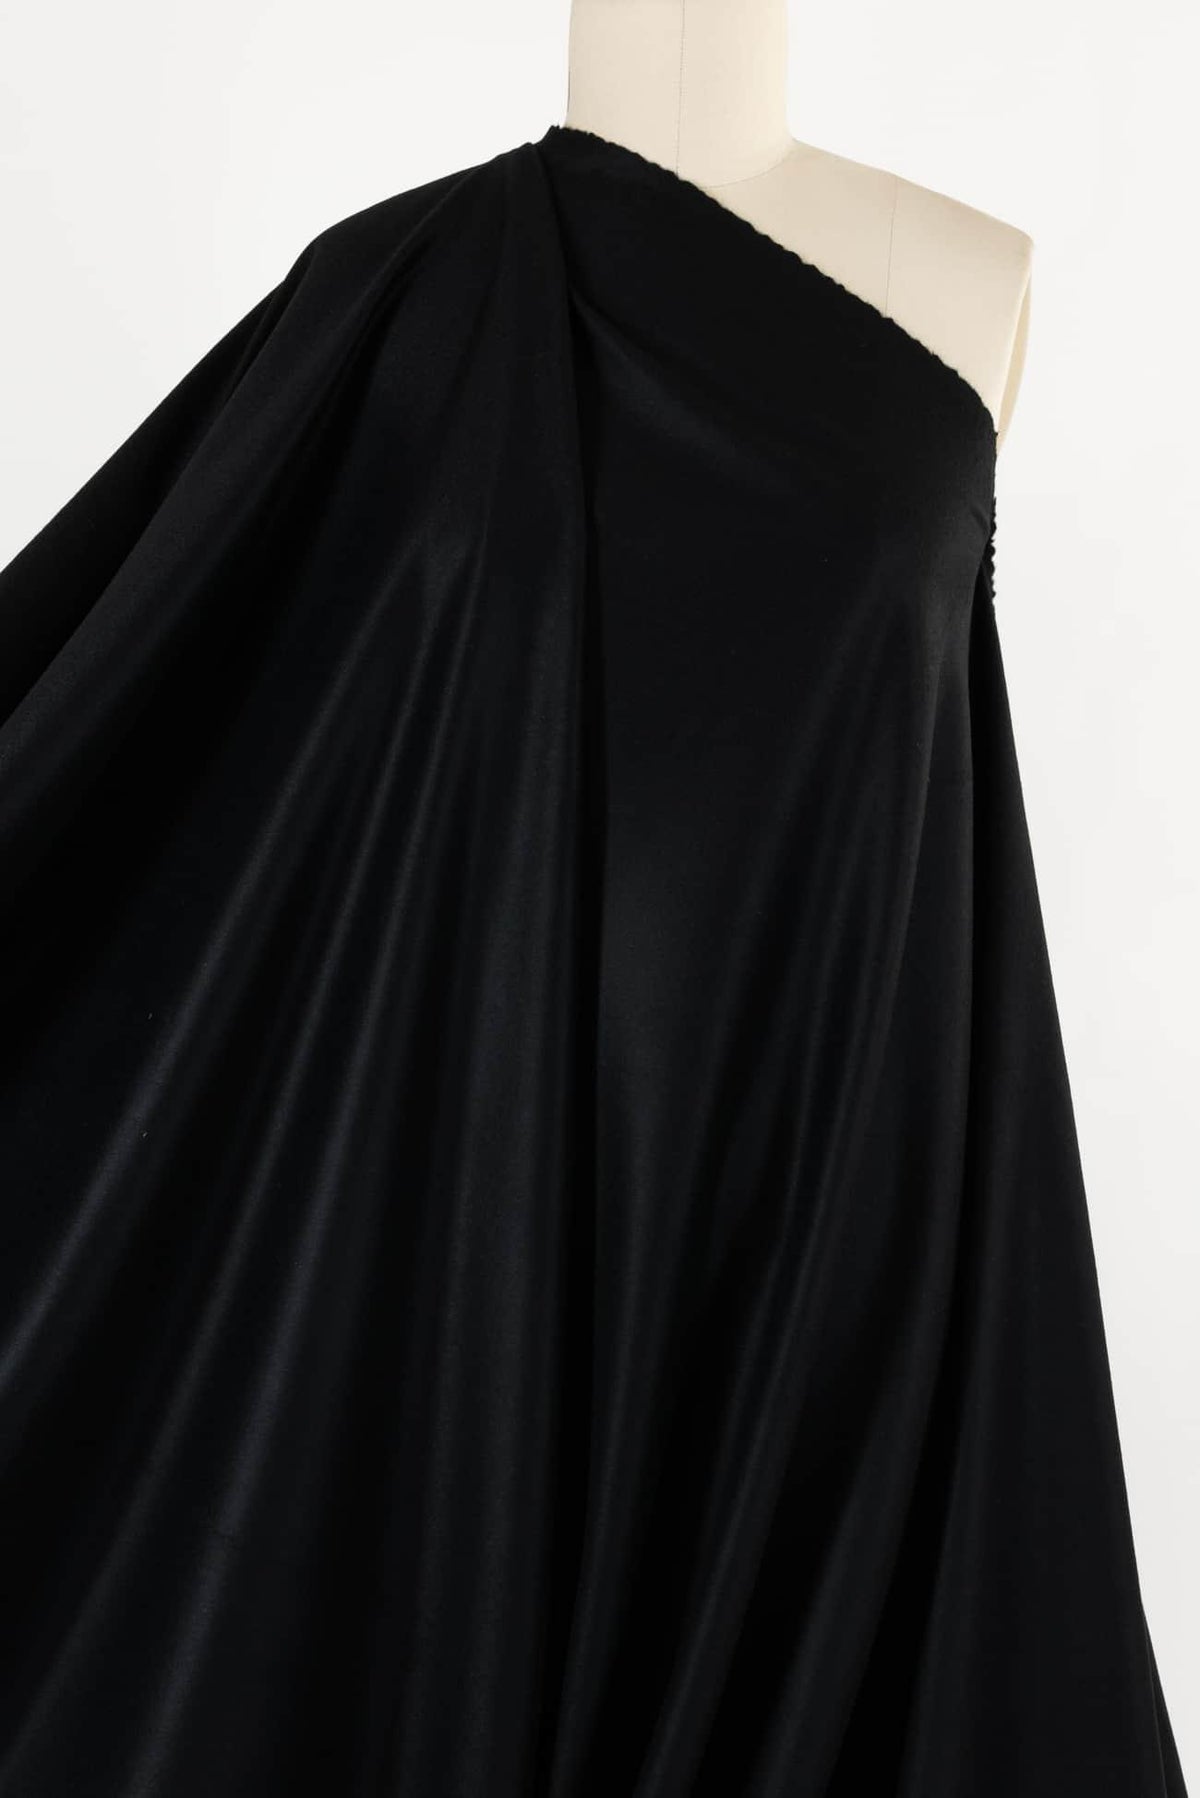 Tuxedo Black Italian Cashmere Woven - Marcy Tilton Fabrics